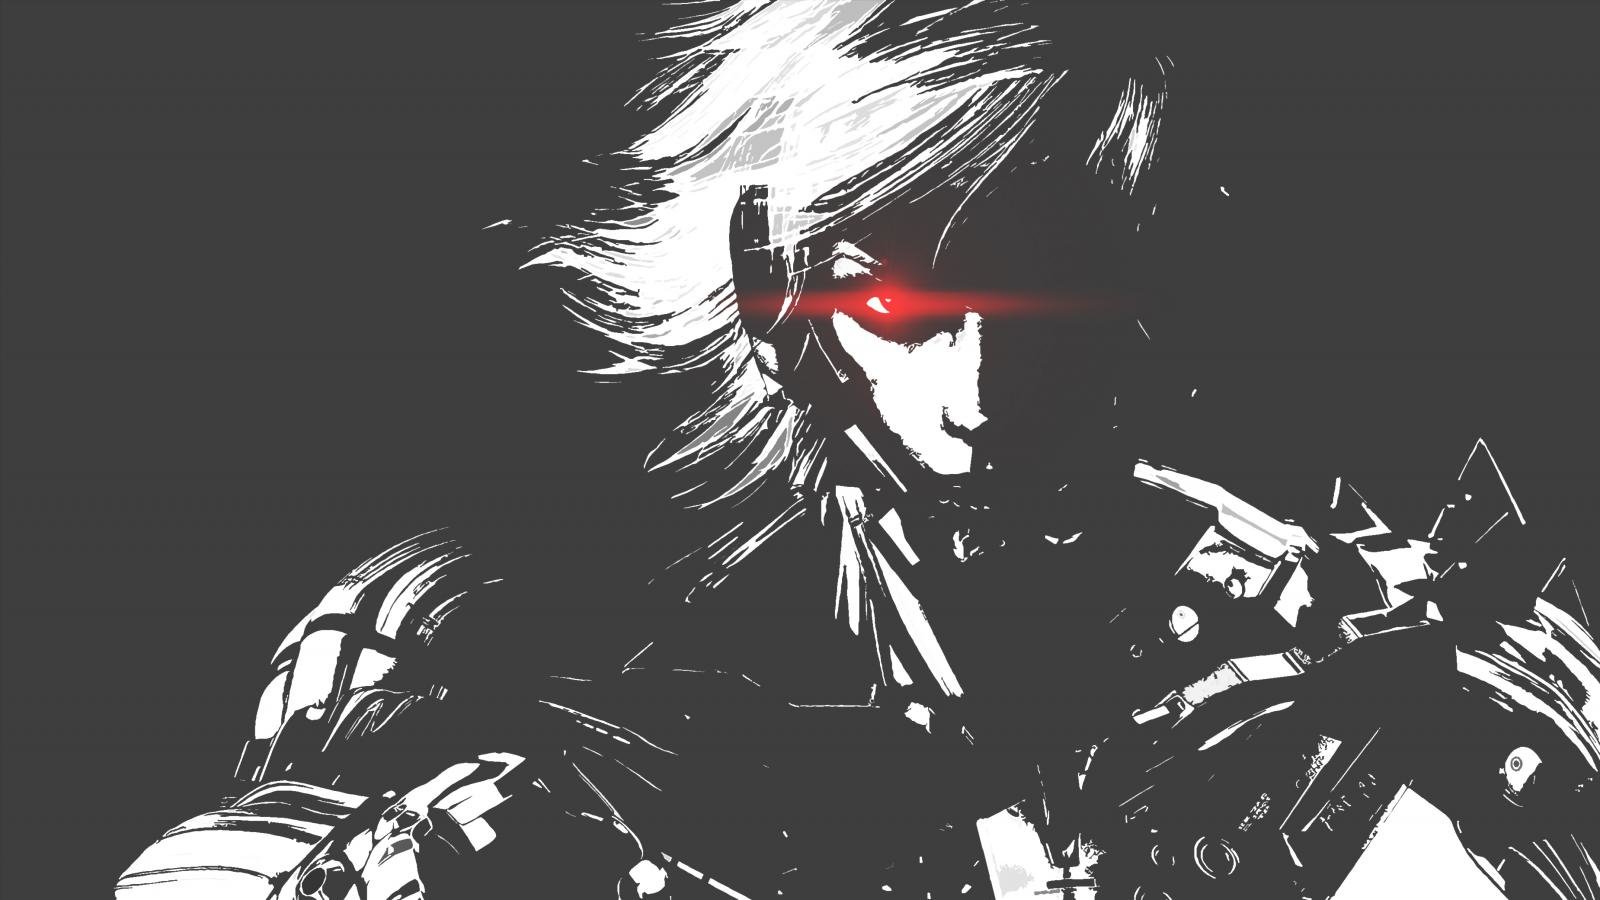 Best Metal Gear Rising: Revengeance (MGR) background ID:130609 for High Resolution hd 1600x900 desktop